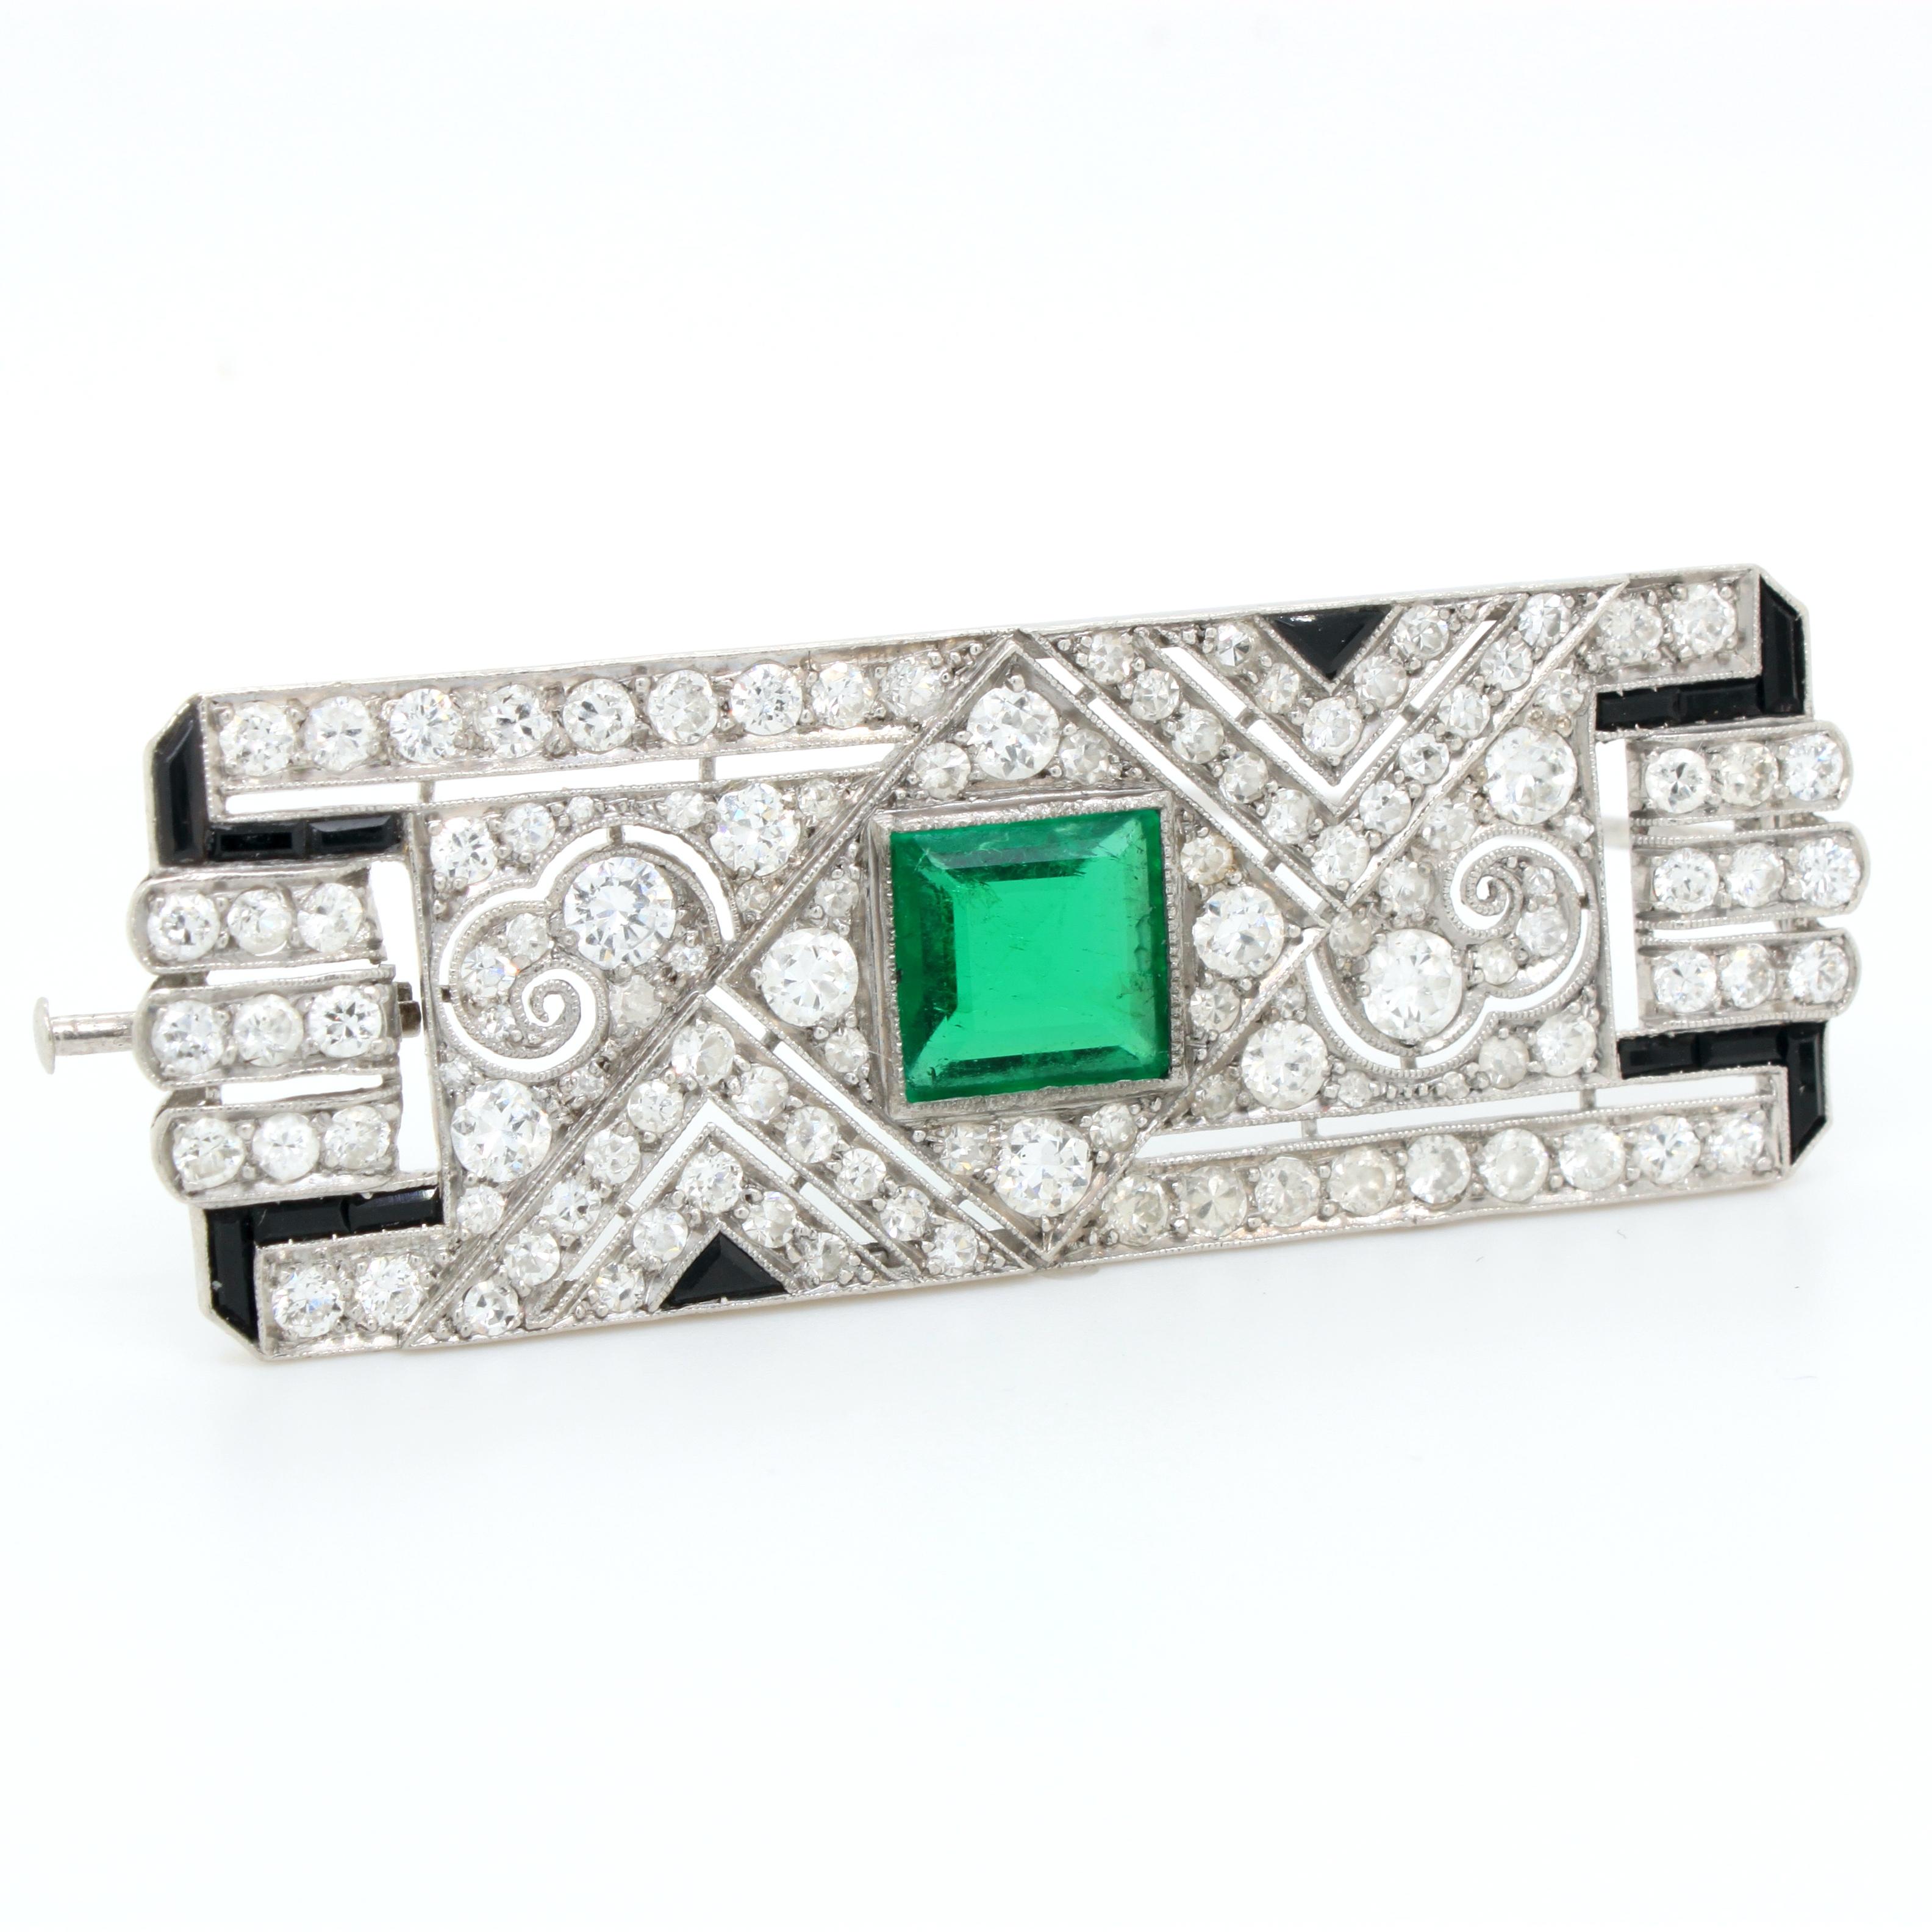 Columbian Emerald, Diamond and Onyx Art Deco Brooch, ca. 1920s For Sale 4